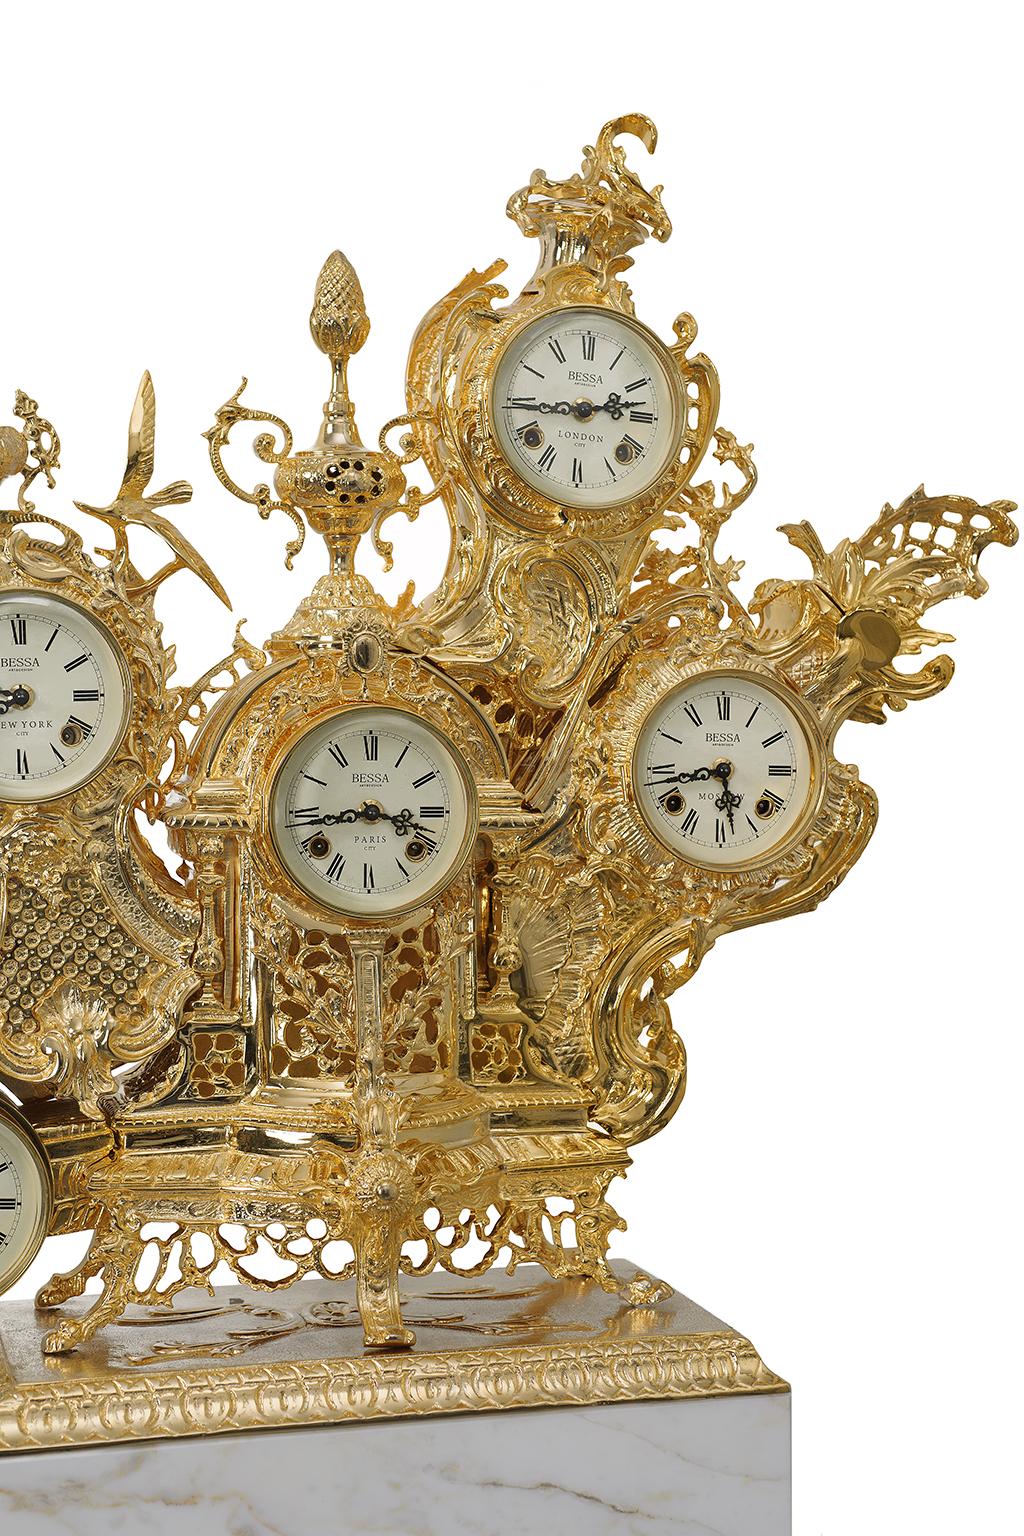 gold table clocks